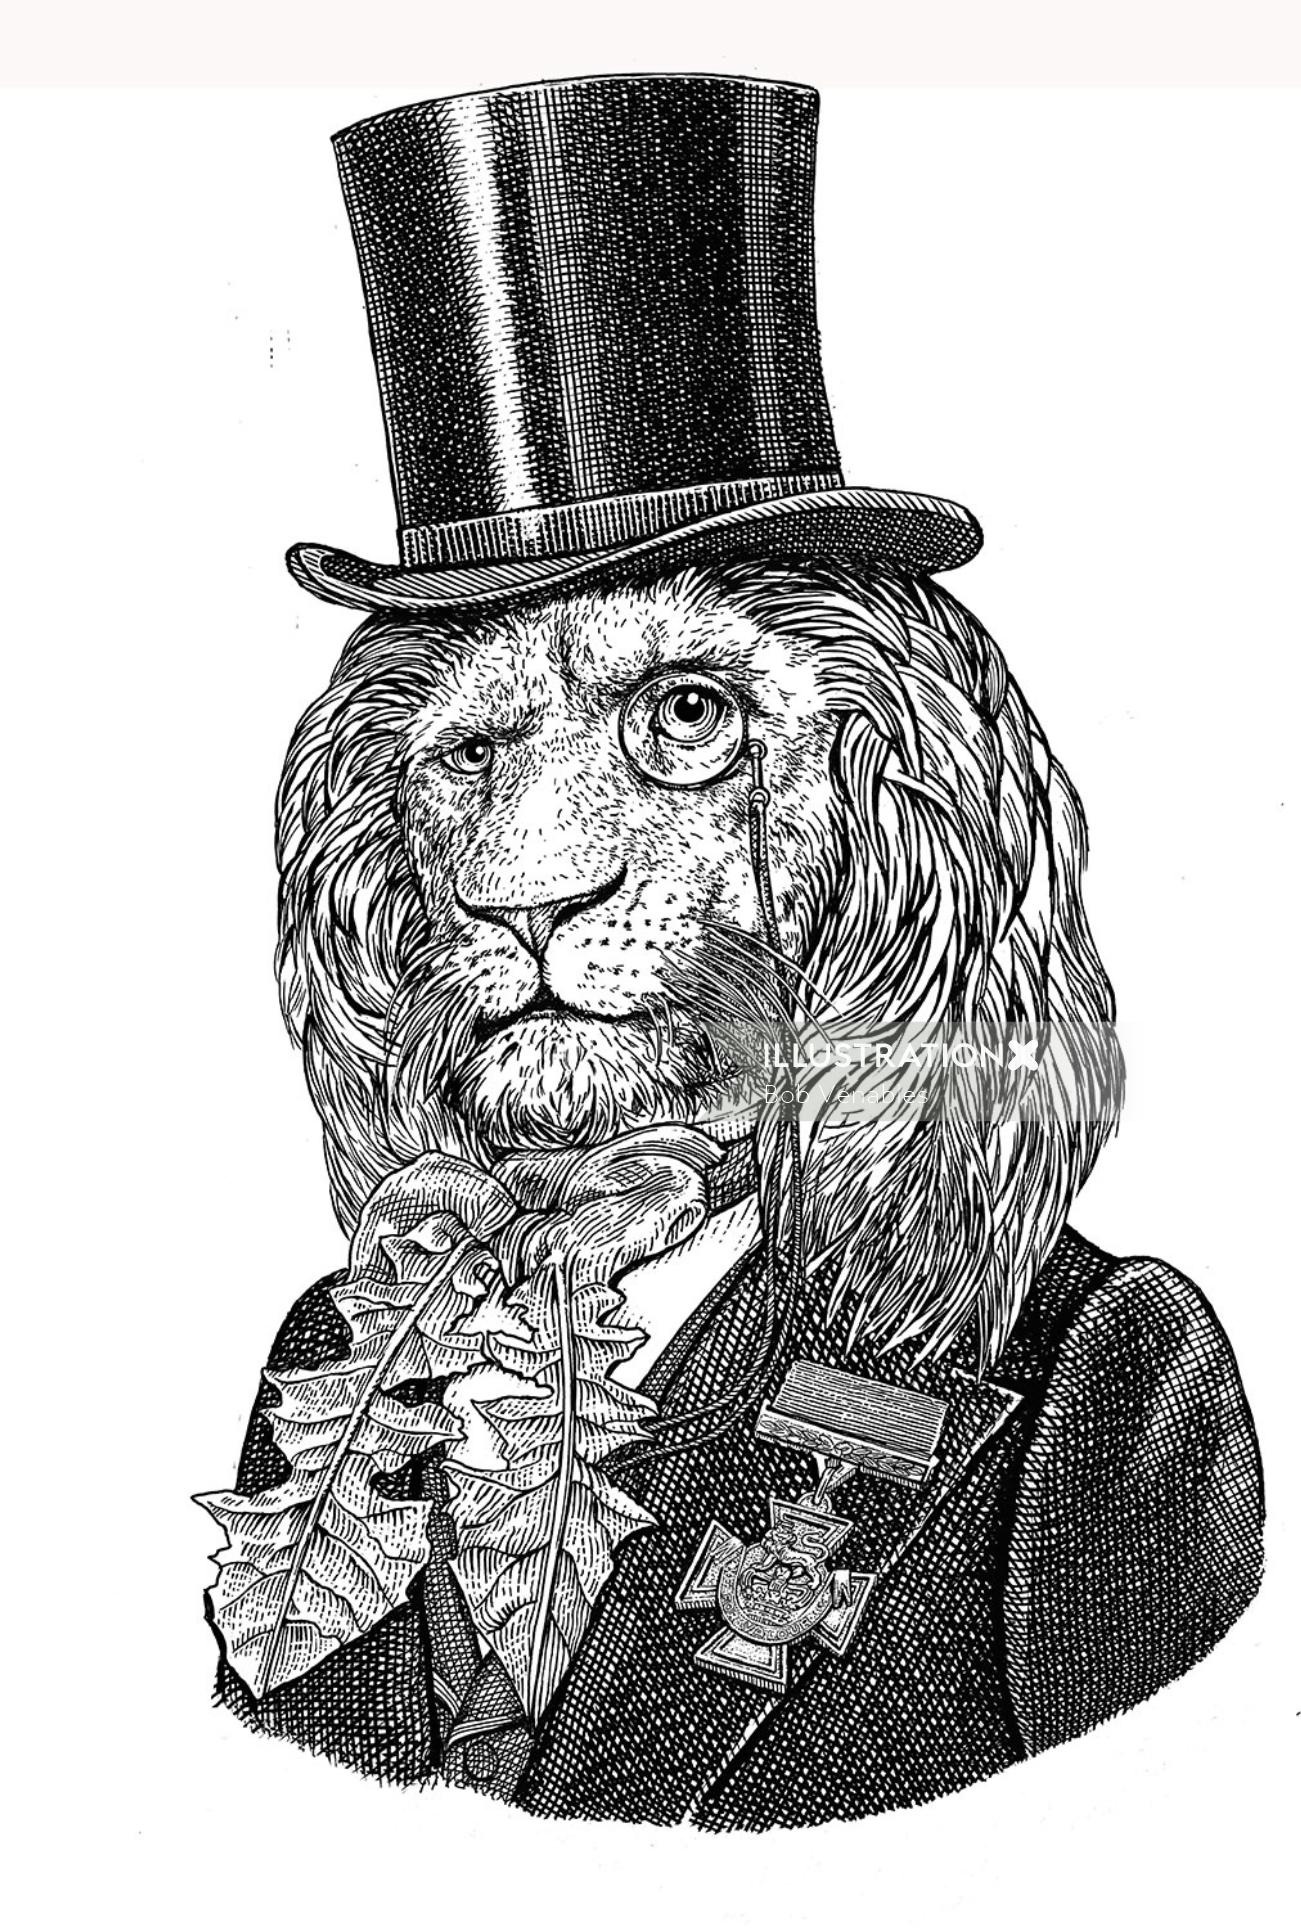 Black and white anthropomorphic Lion illustration